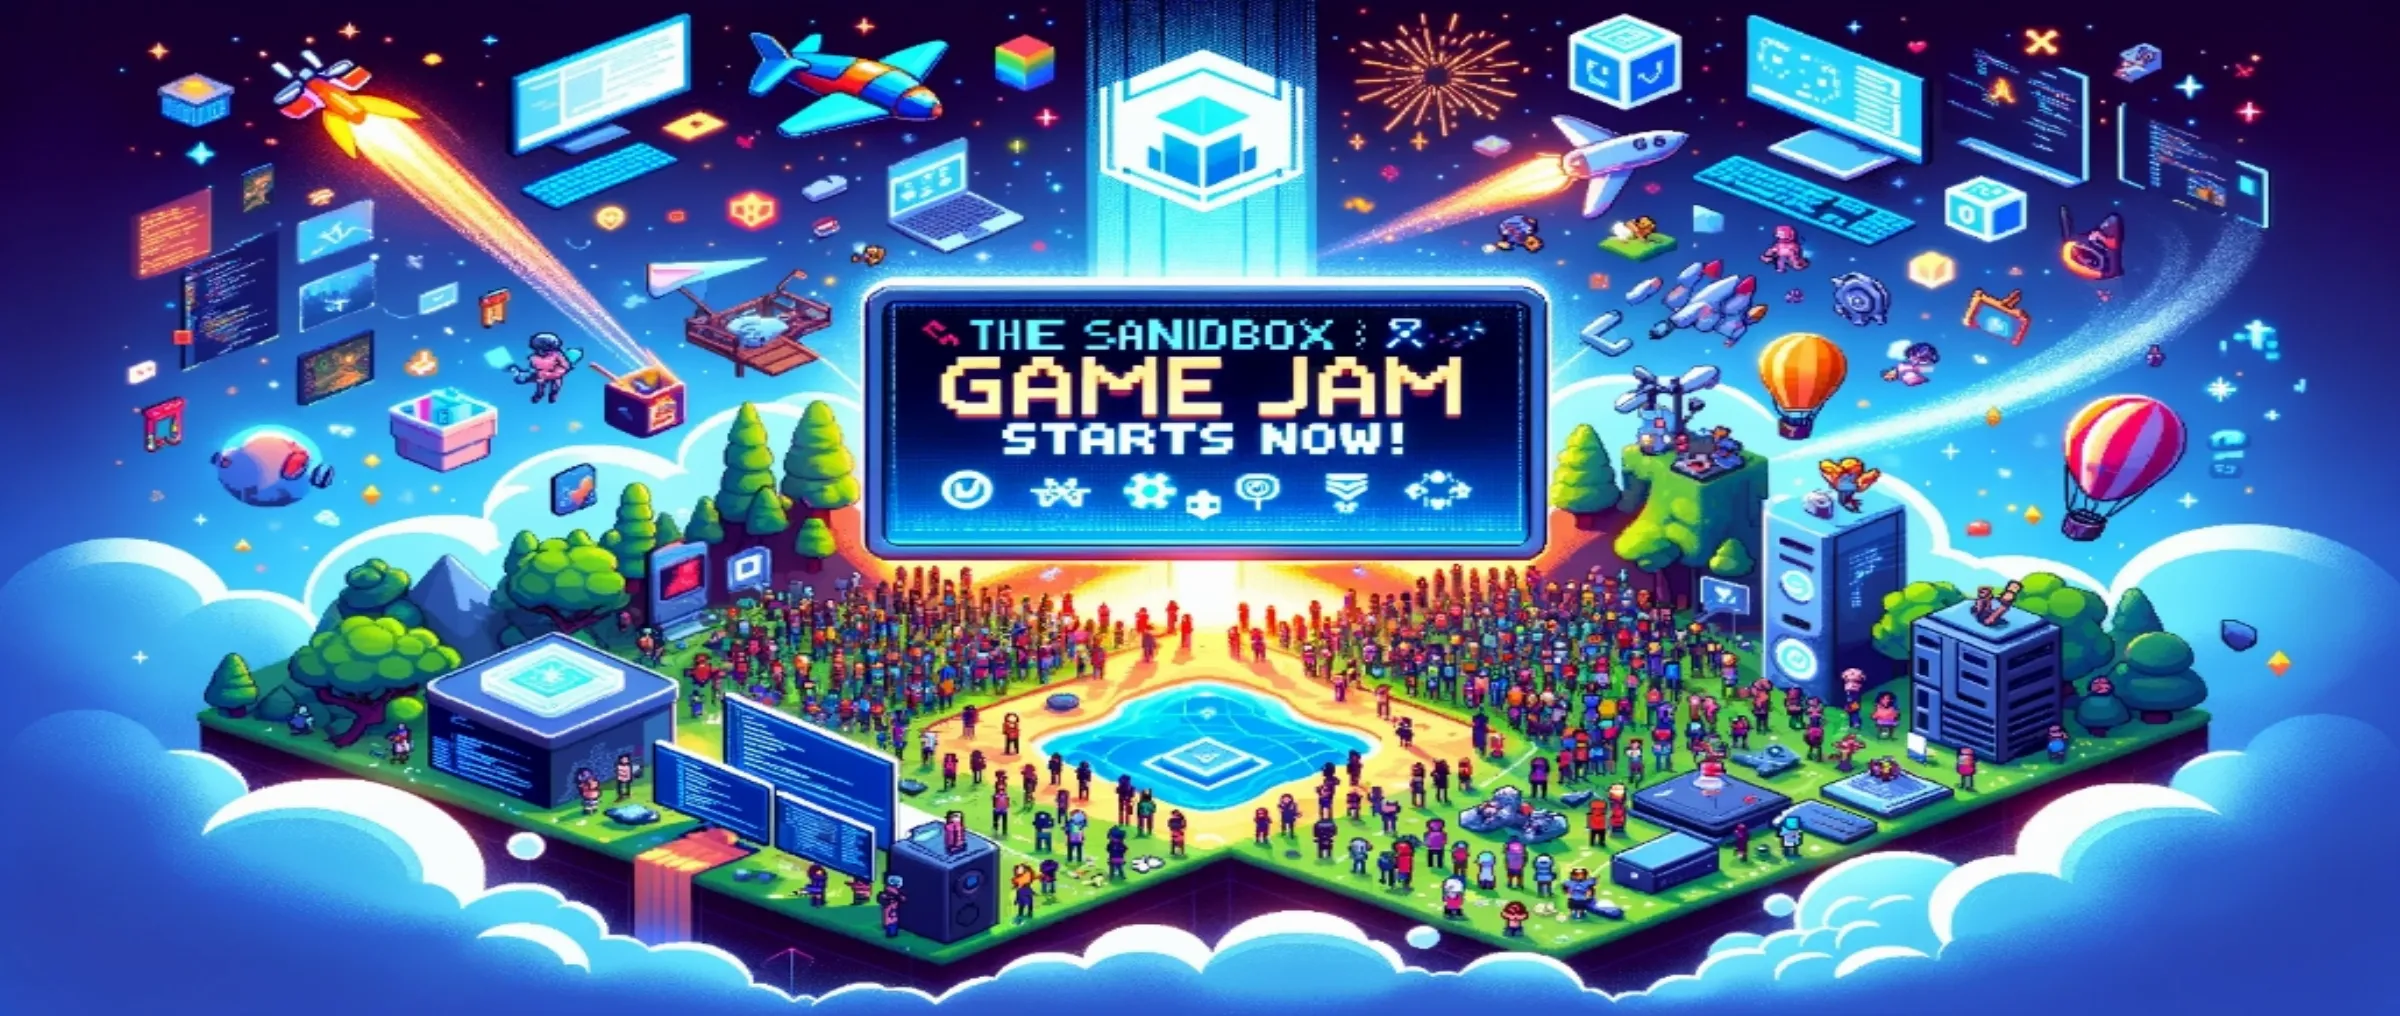 The Sandbox Launches Game Jam